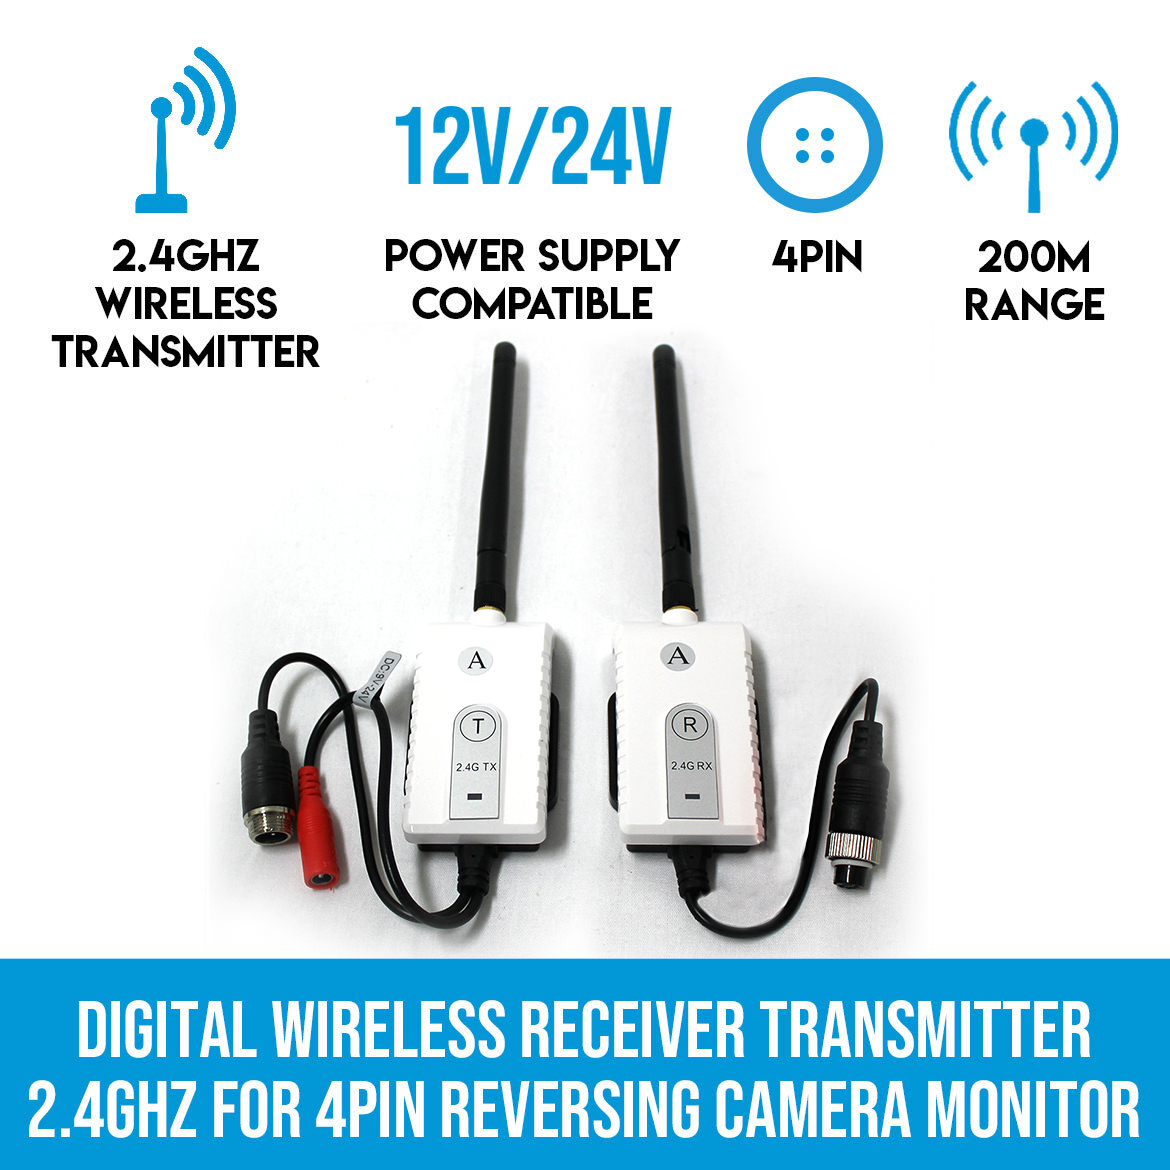 Elinz Digital Wireless Receiver Transmitter 2.4GHz For 4PIN Reversing Camera Monitor Channel 2